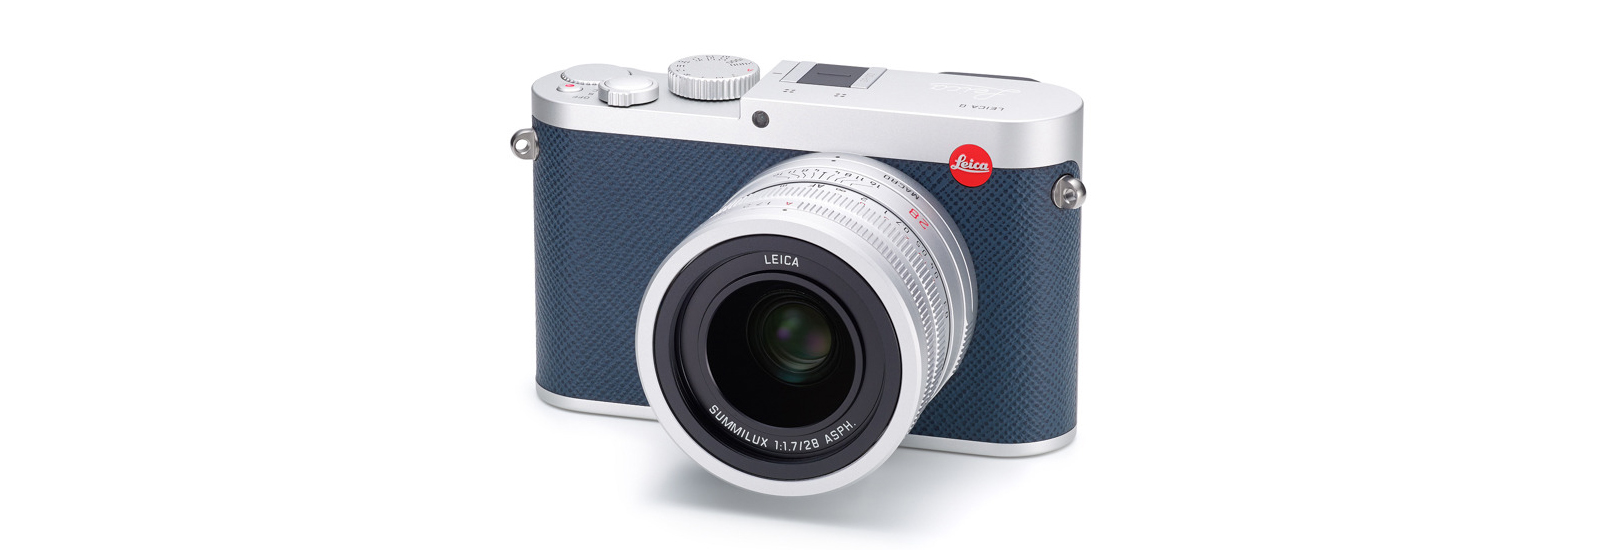 Leica-Q-Globe-Trotter-limited-edition-camera3.jpg